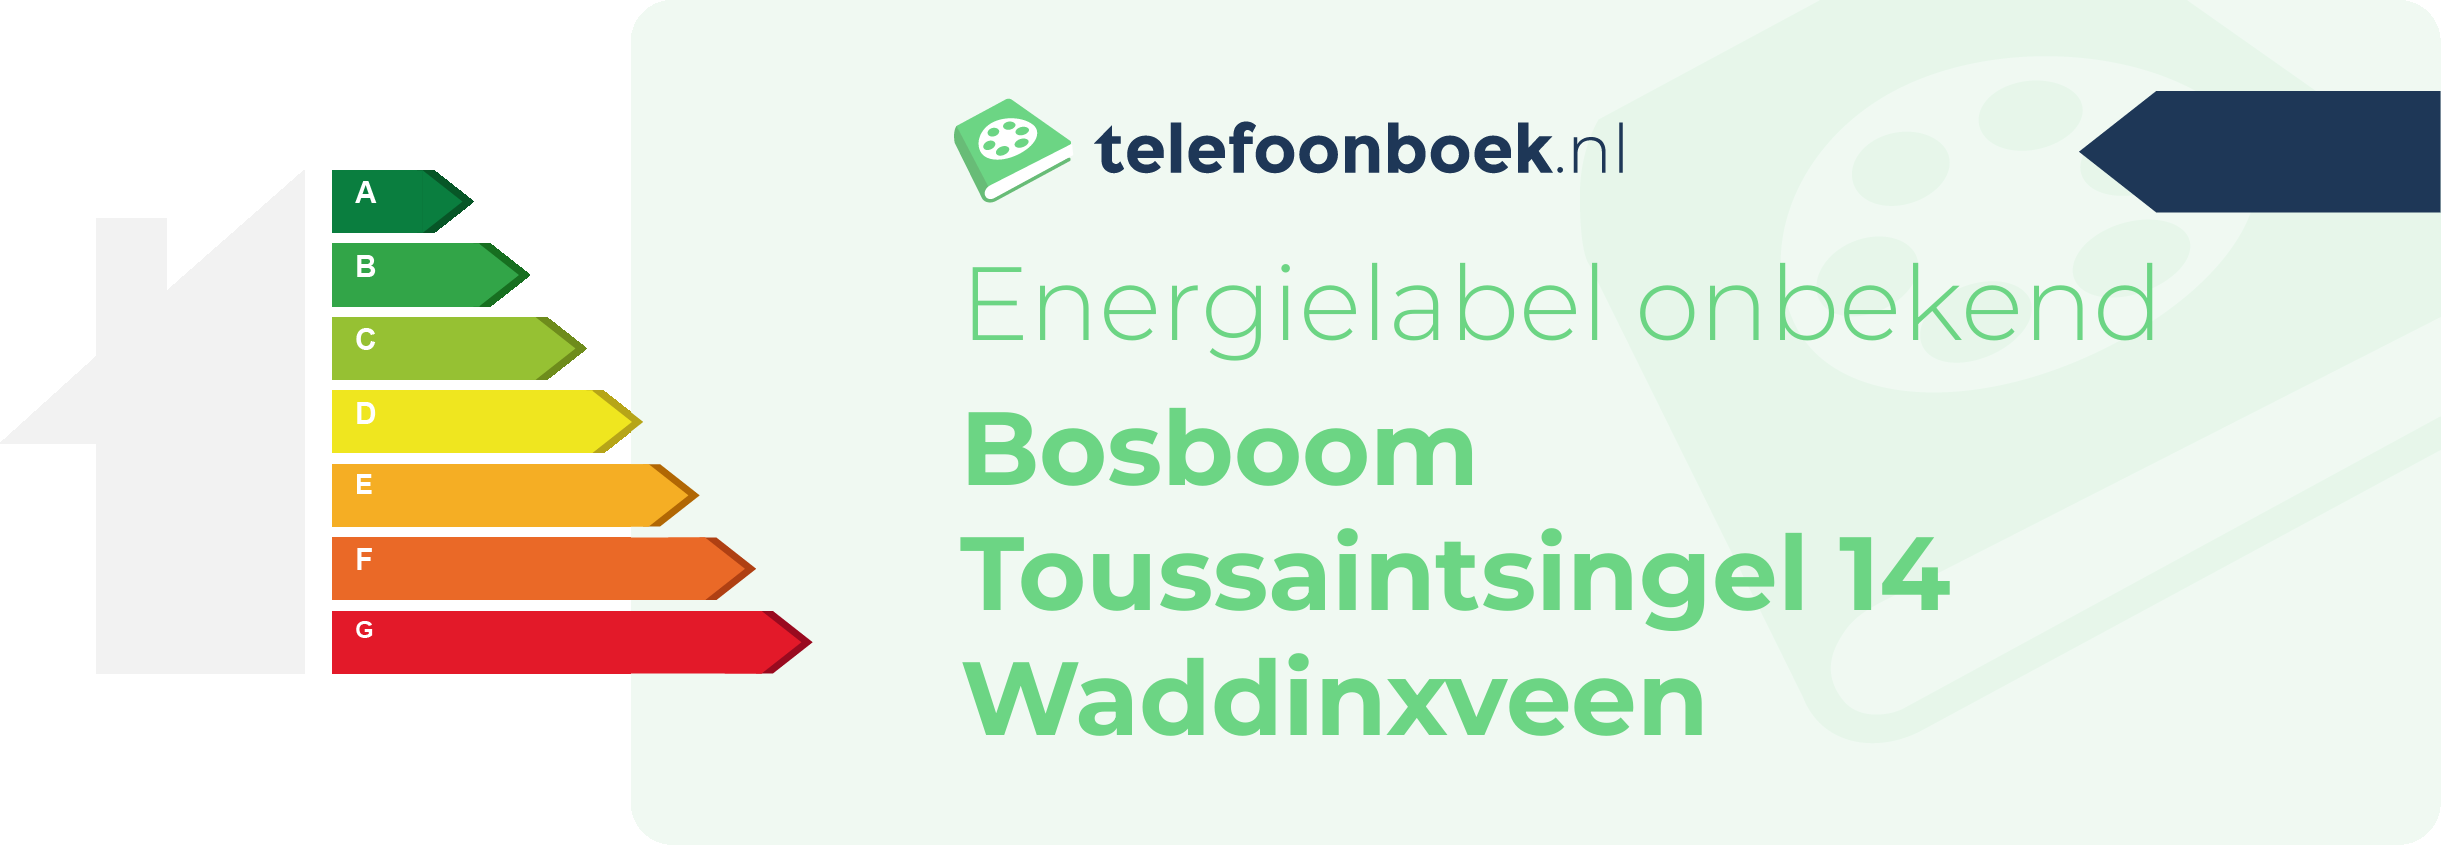 Energielabel Bosboom Toussaintsingel 14 Waddinxveen